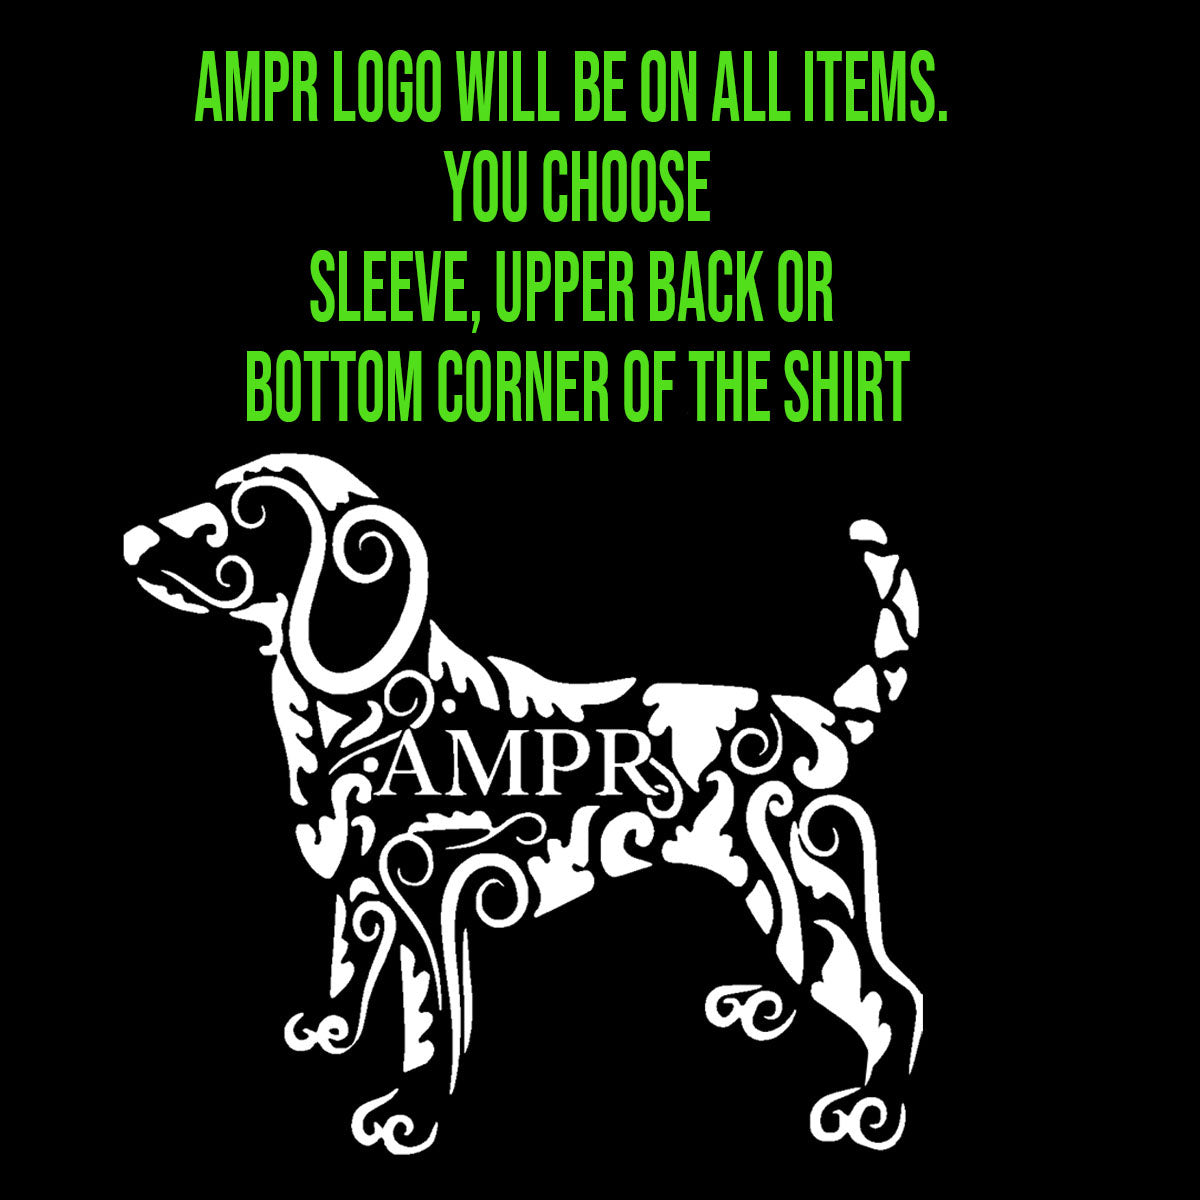 Ampr design 4 non hooded sweatshirt